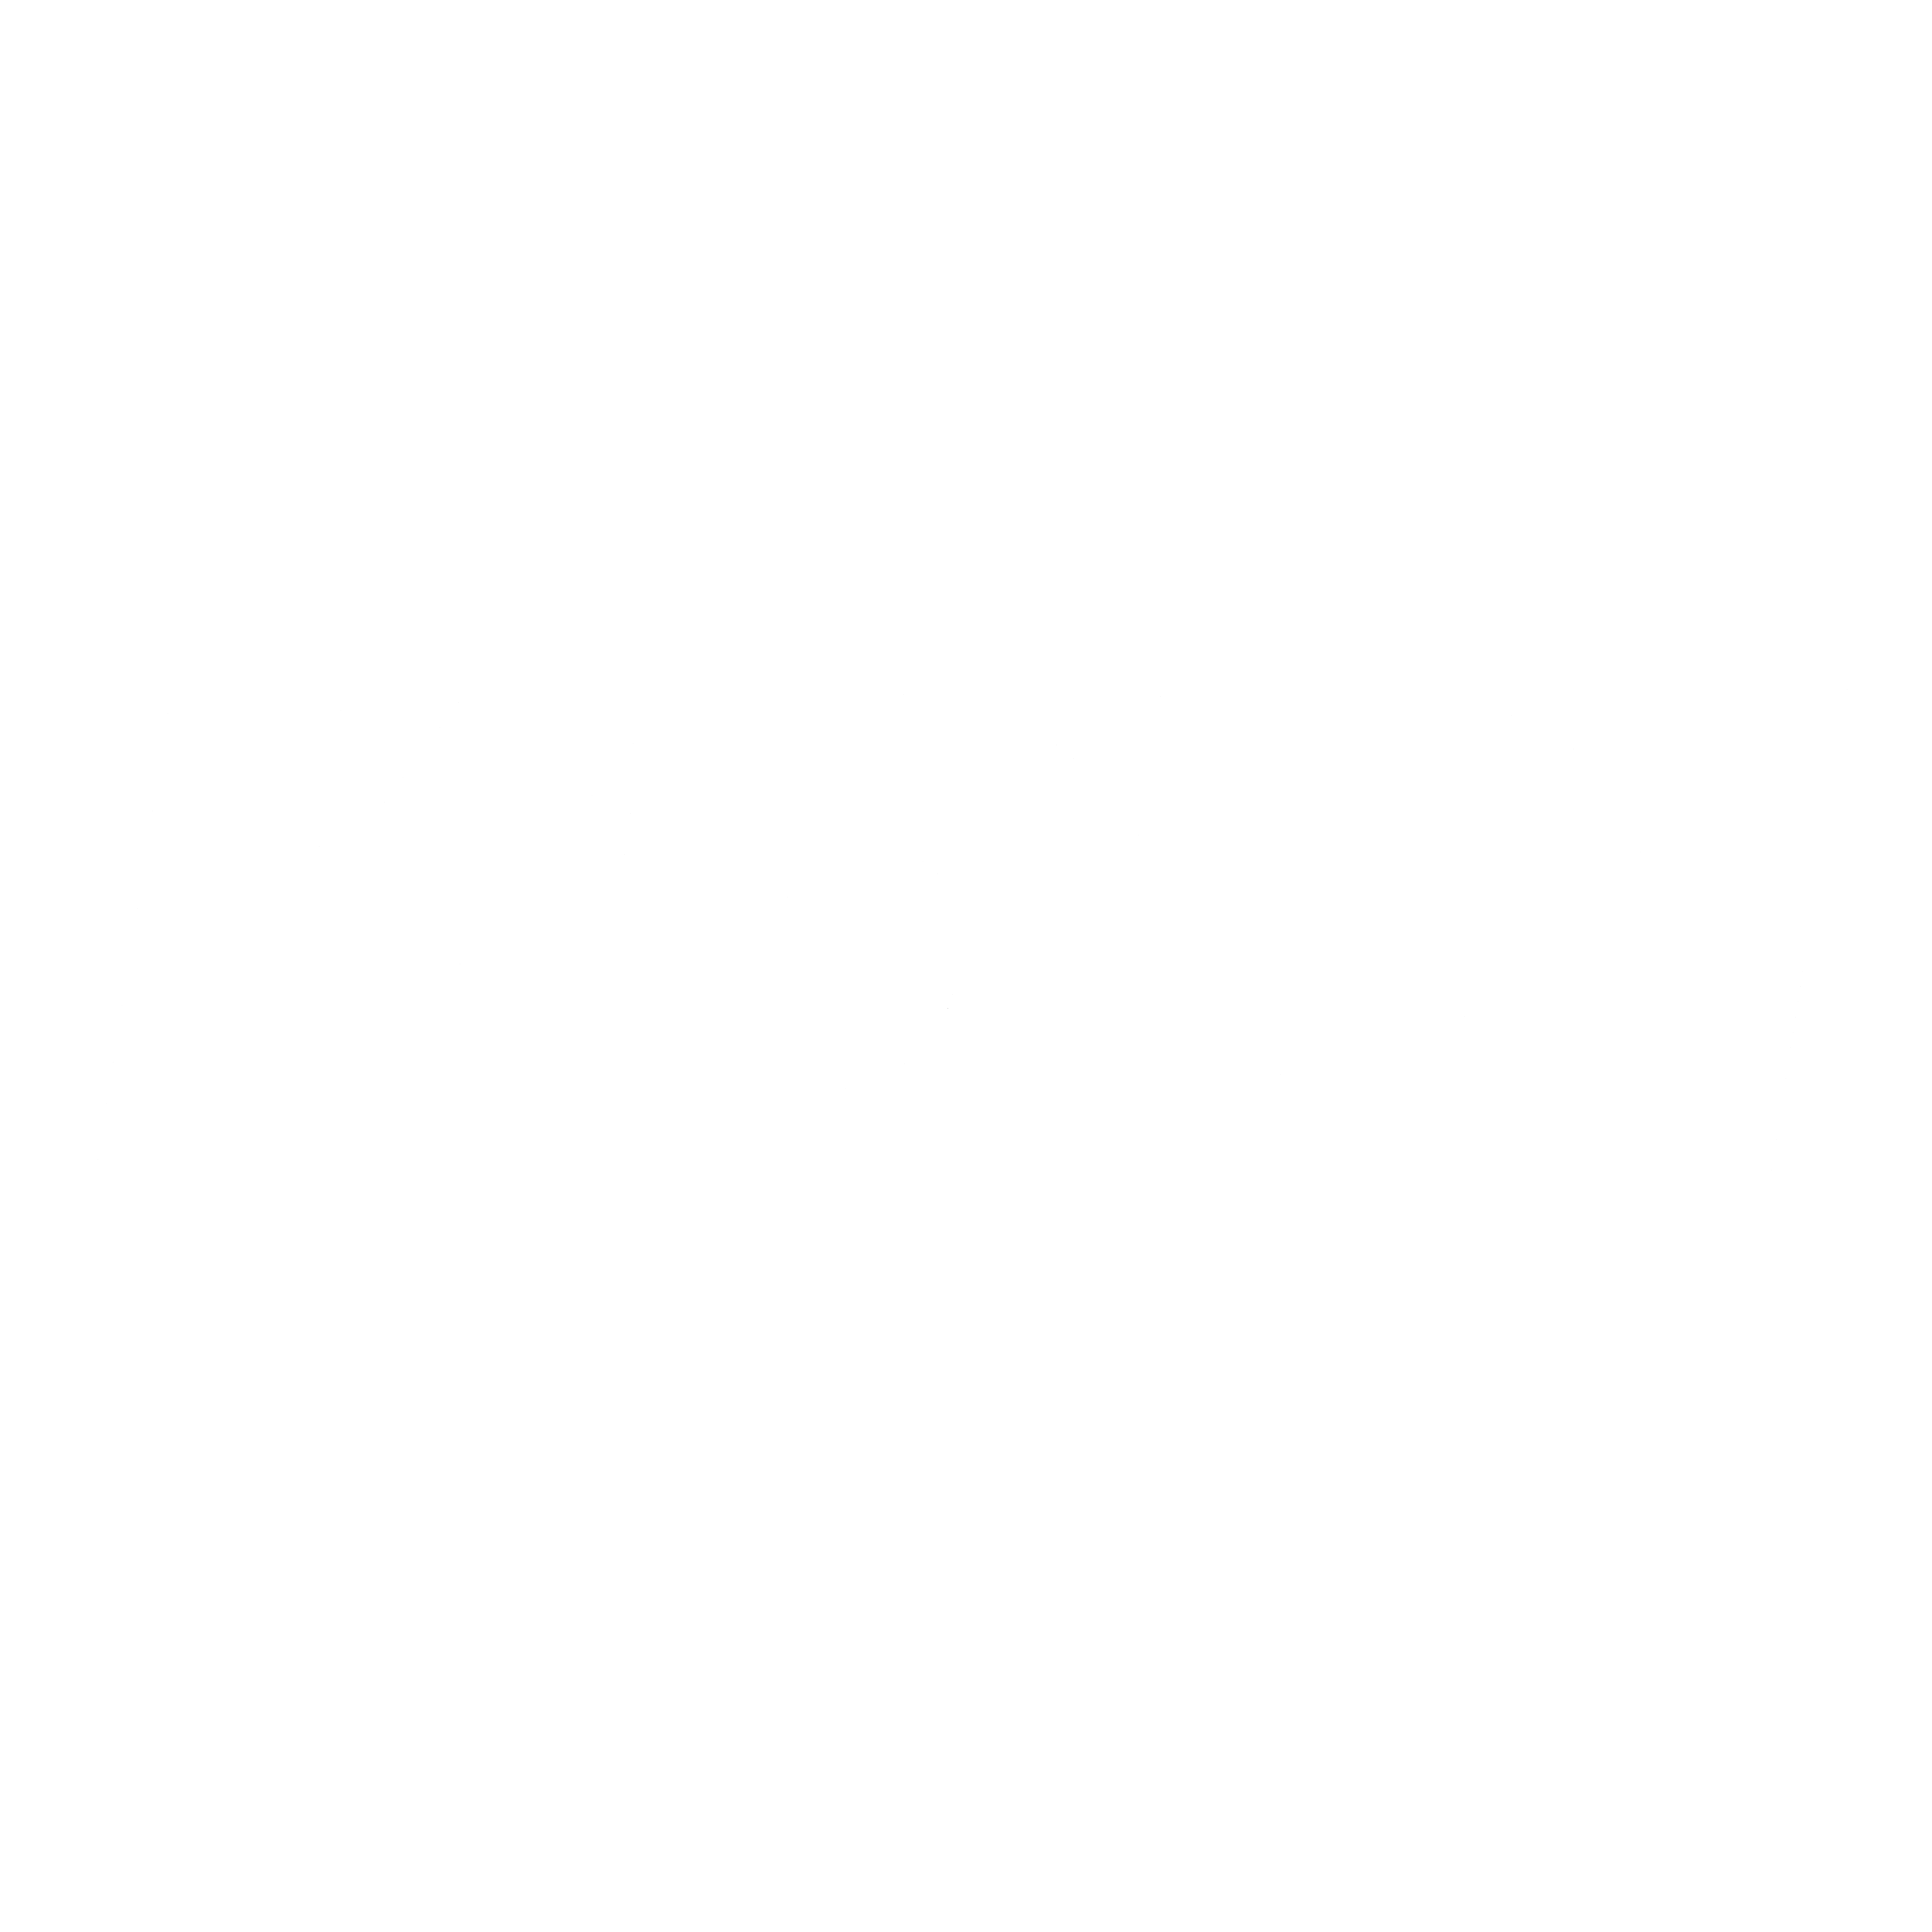 KDDI Logo - KDDI Logo PNG Transparent & SVG Vector